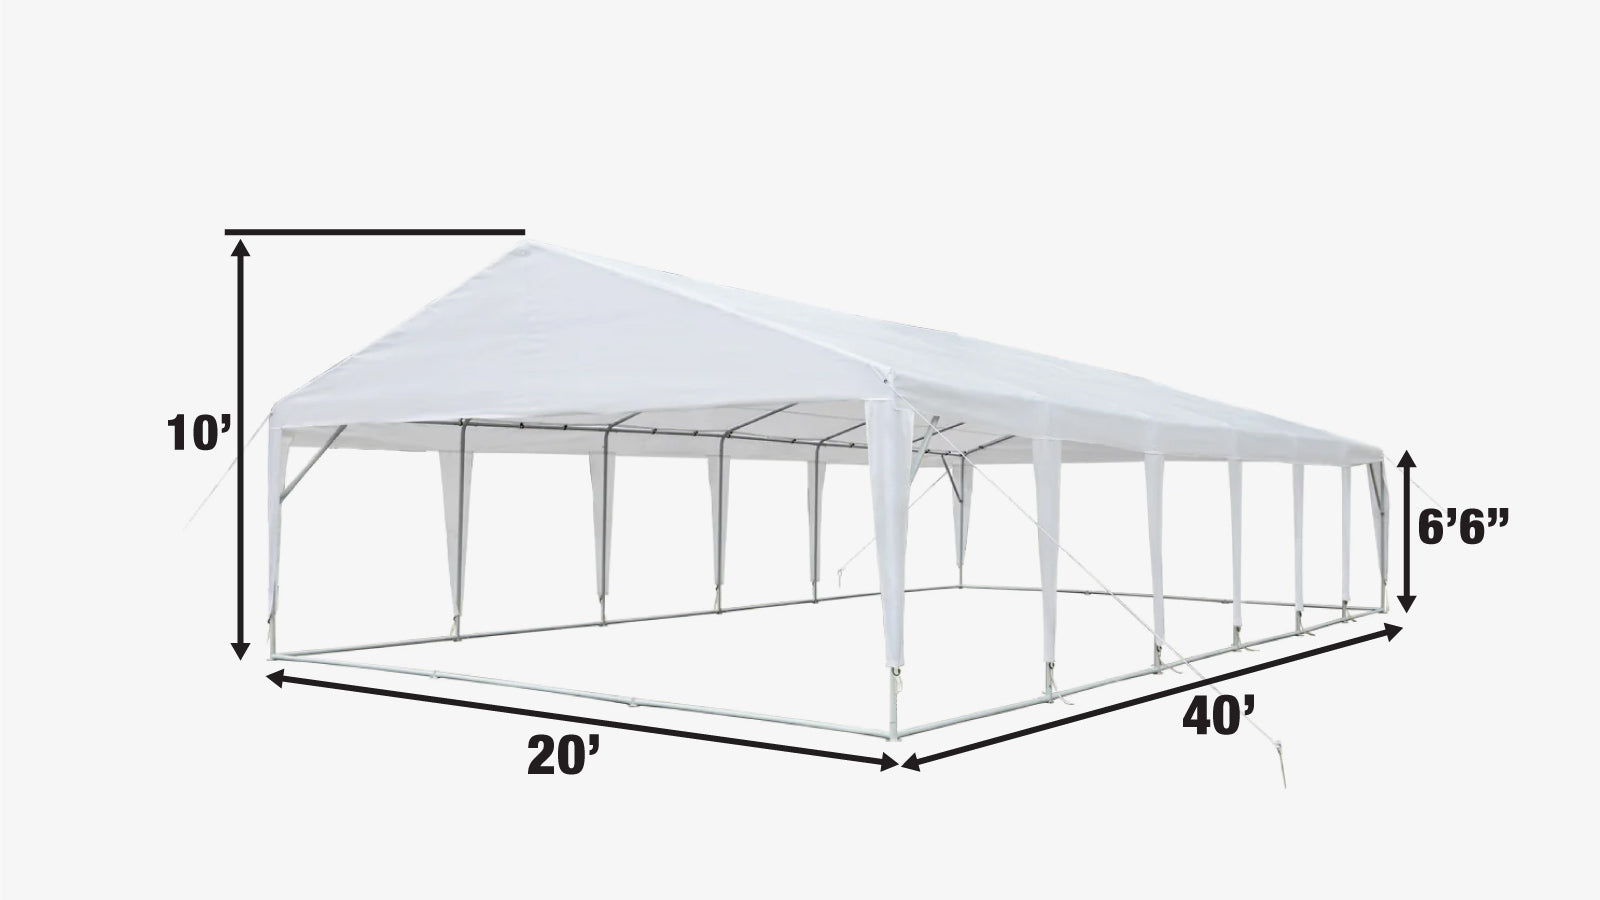 TMG Industrial 20' x 40' Heavy Duty Outdoor Party Tent, PE tarpaulin fabric, 6’6” Overhead, 10’ Peak Ceiling, TMG-PT2040A-specifications-image